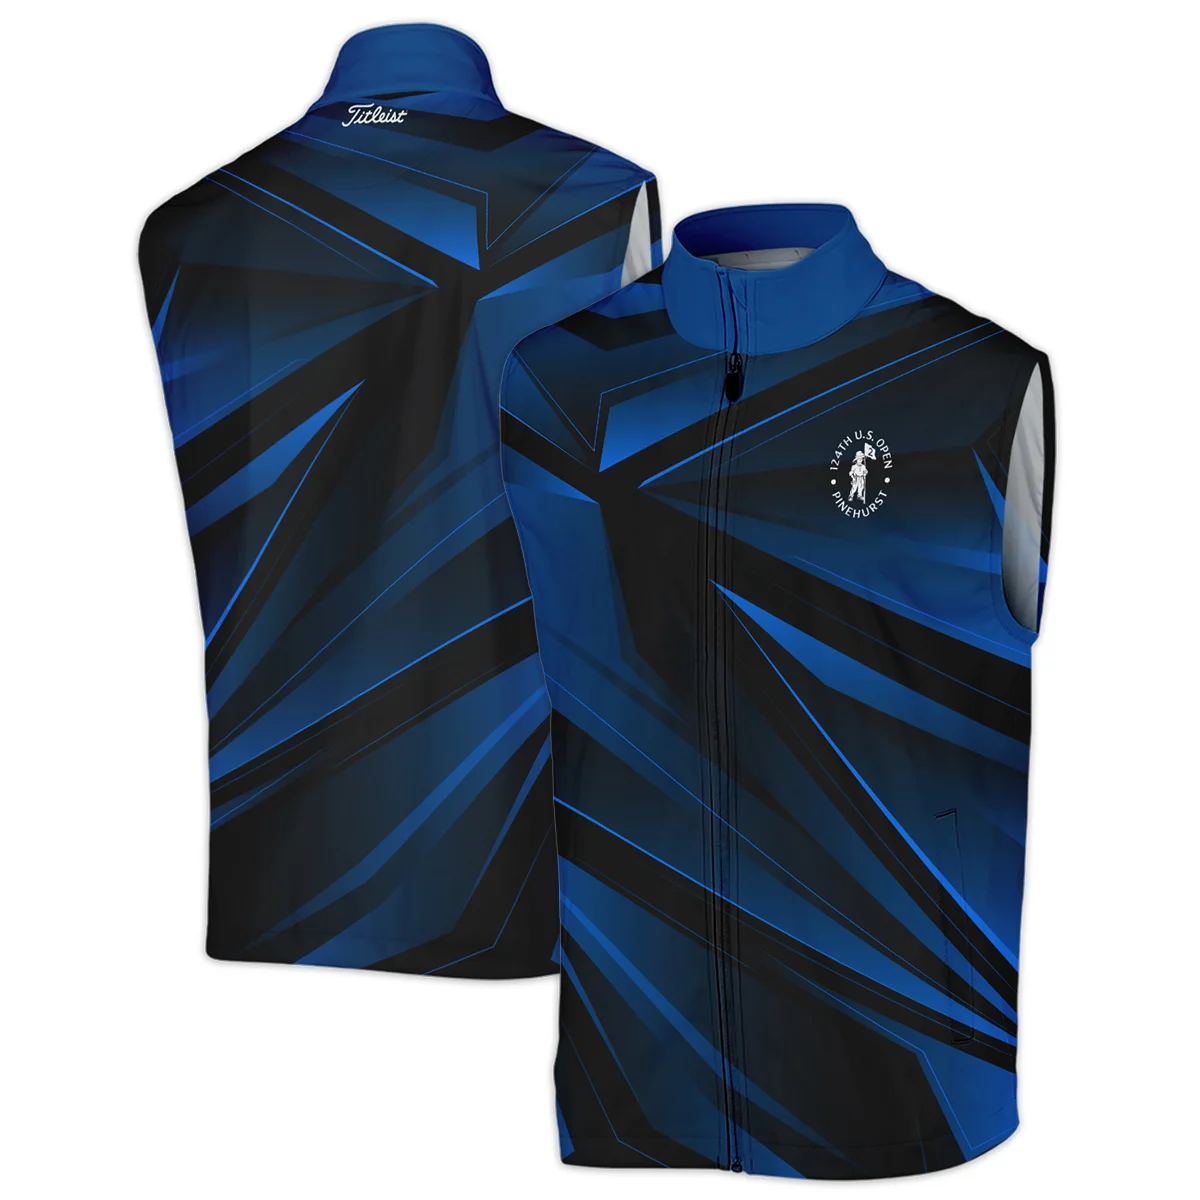 Titleist 124th U.S. Open Pinehurst Dark Blue Gradient Sublimation Sleeveless Jacket Style Classic